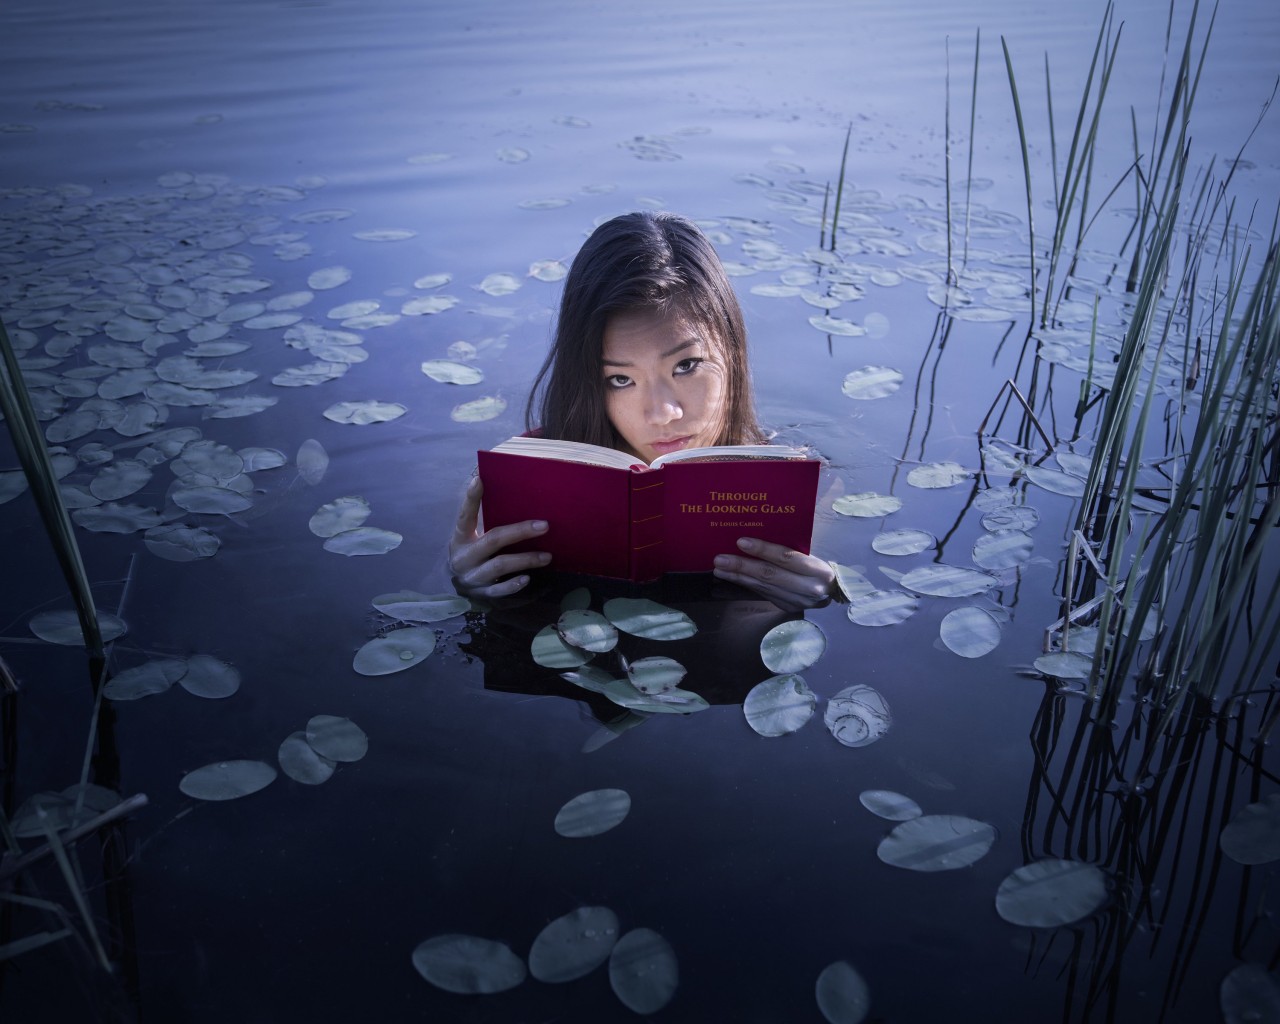 Азиатка с книгой в озере 1280x1024